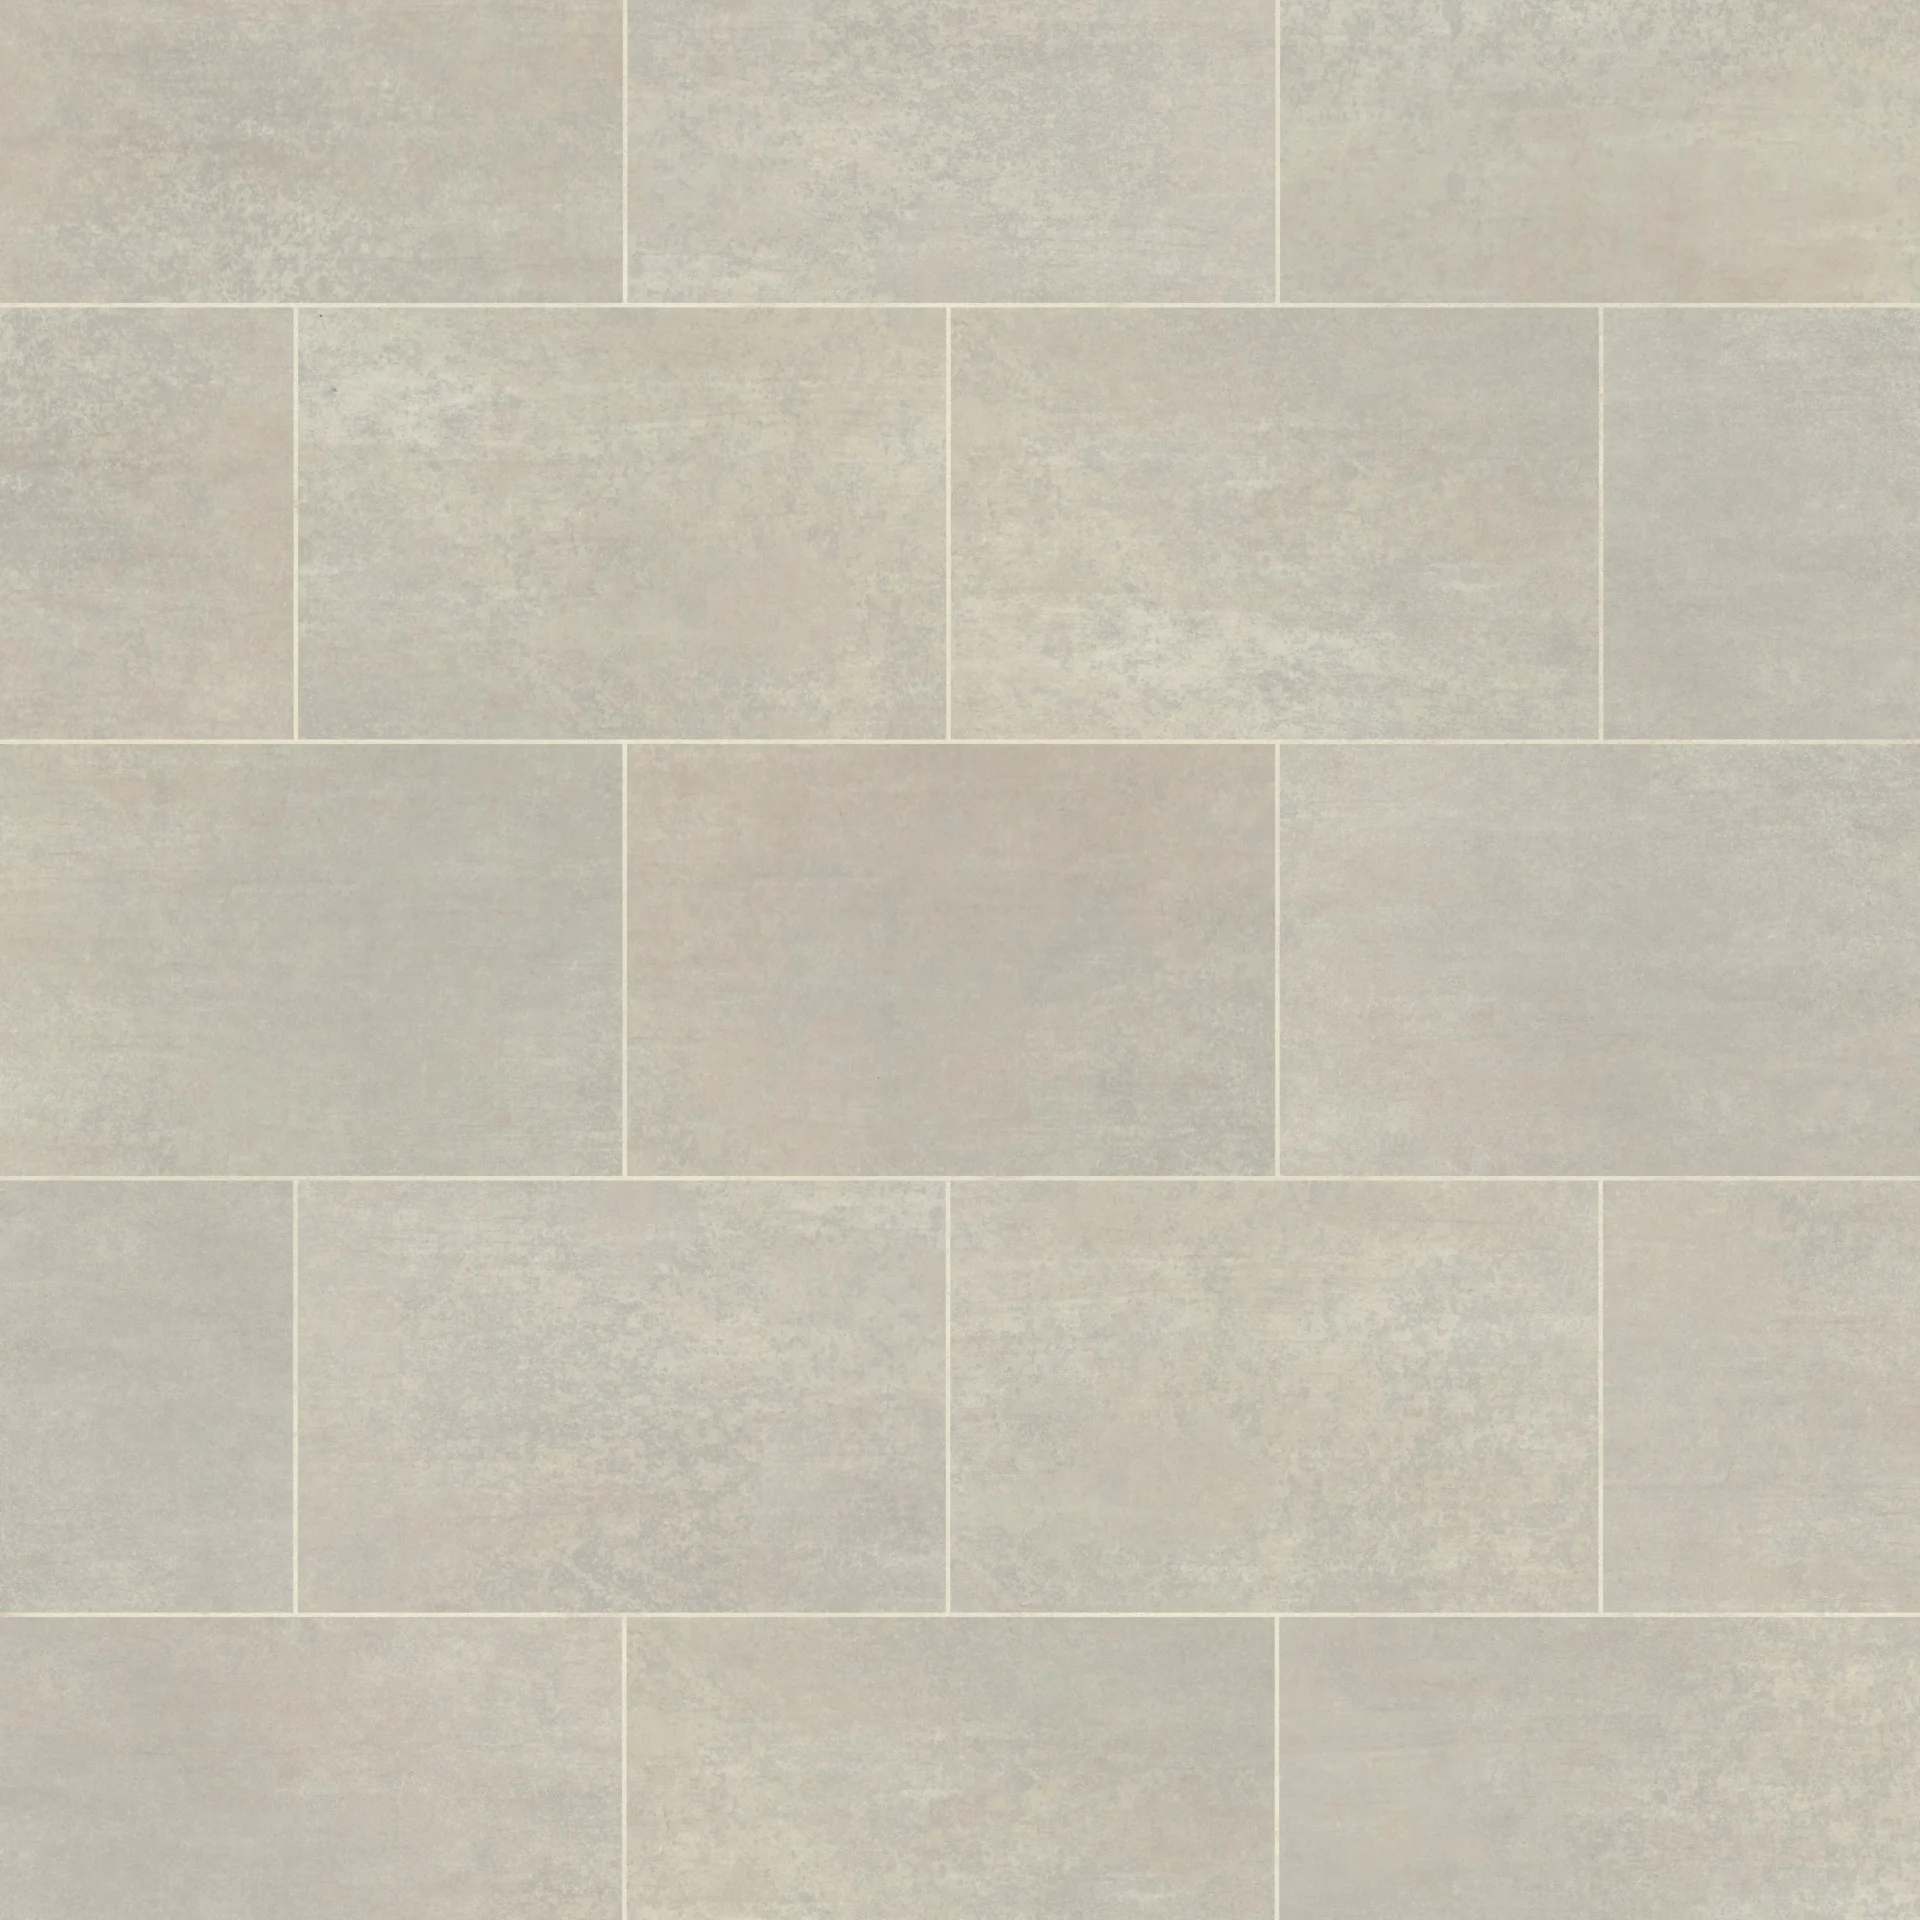 Karndean Knight Tile Dove Grey Concrete ST21